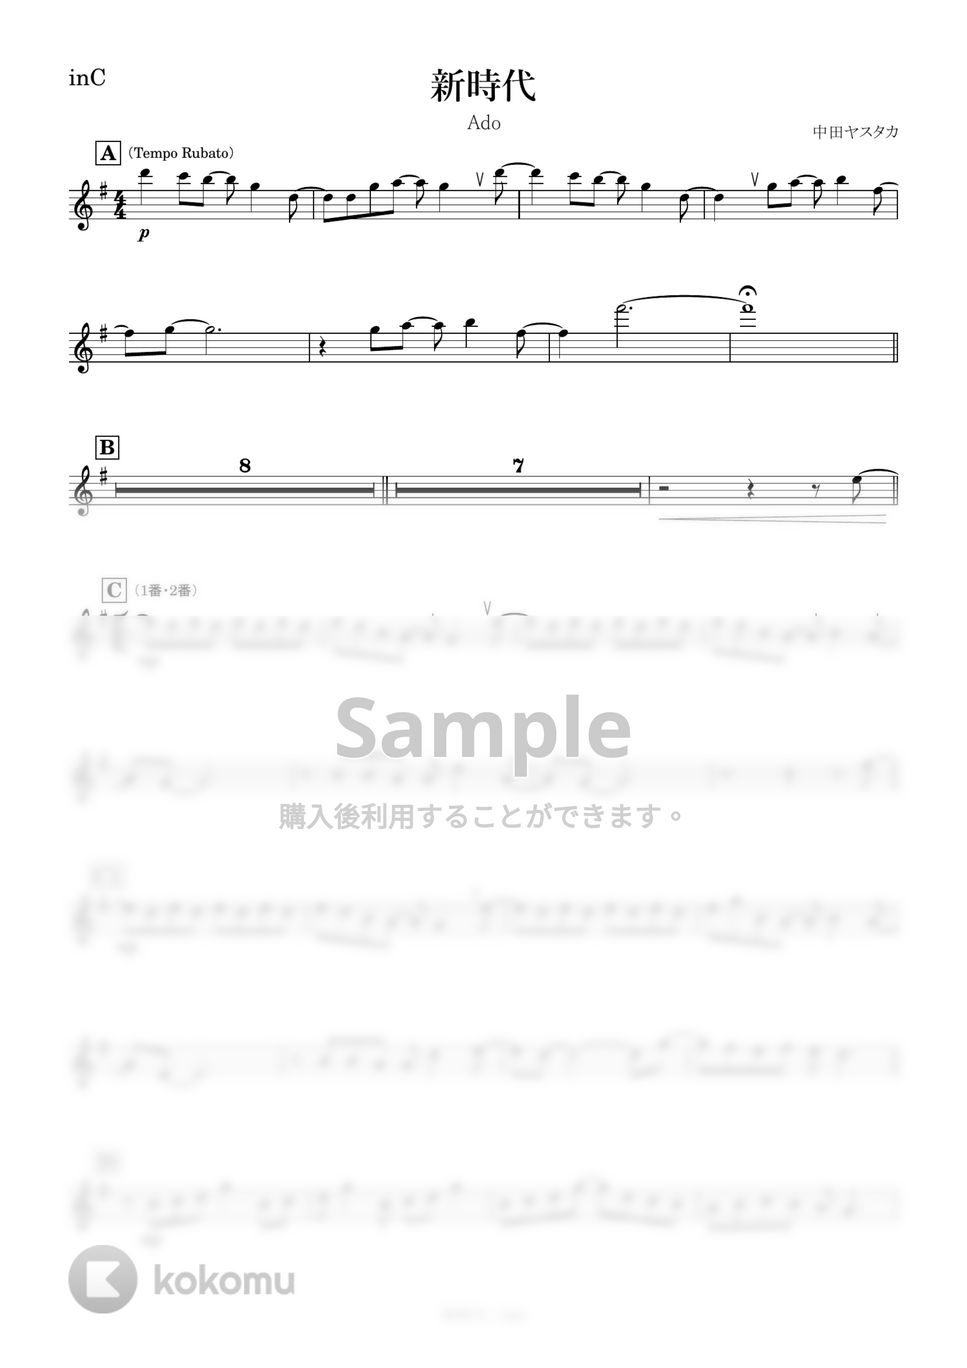 Ado - 【ONE PIECE】新時代 (C) by kanamusic